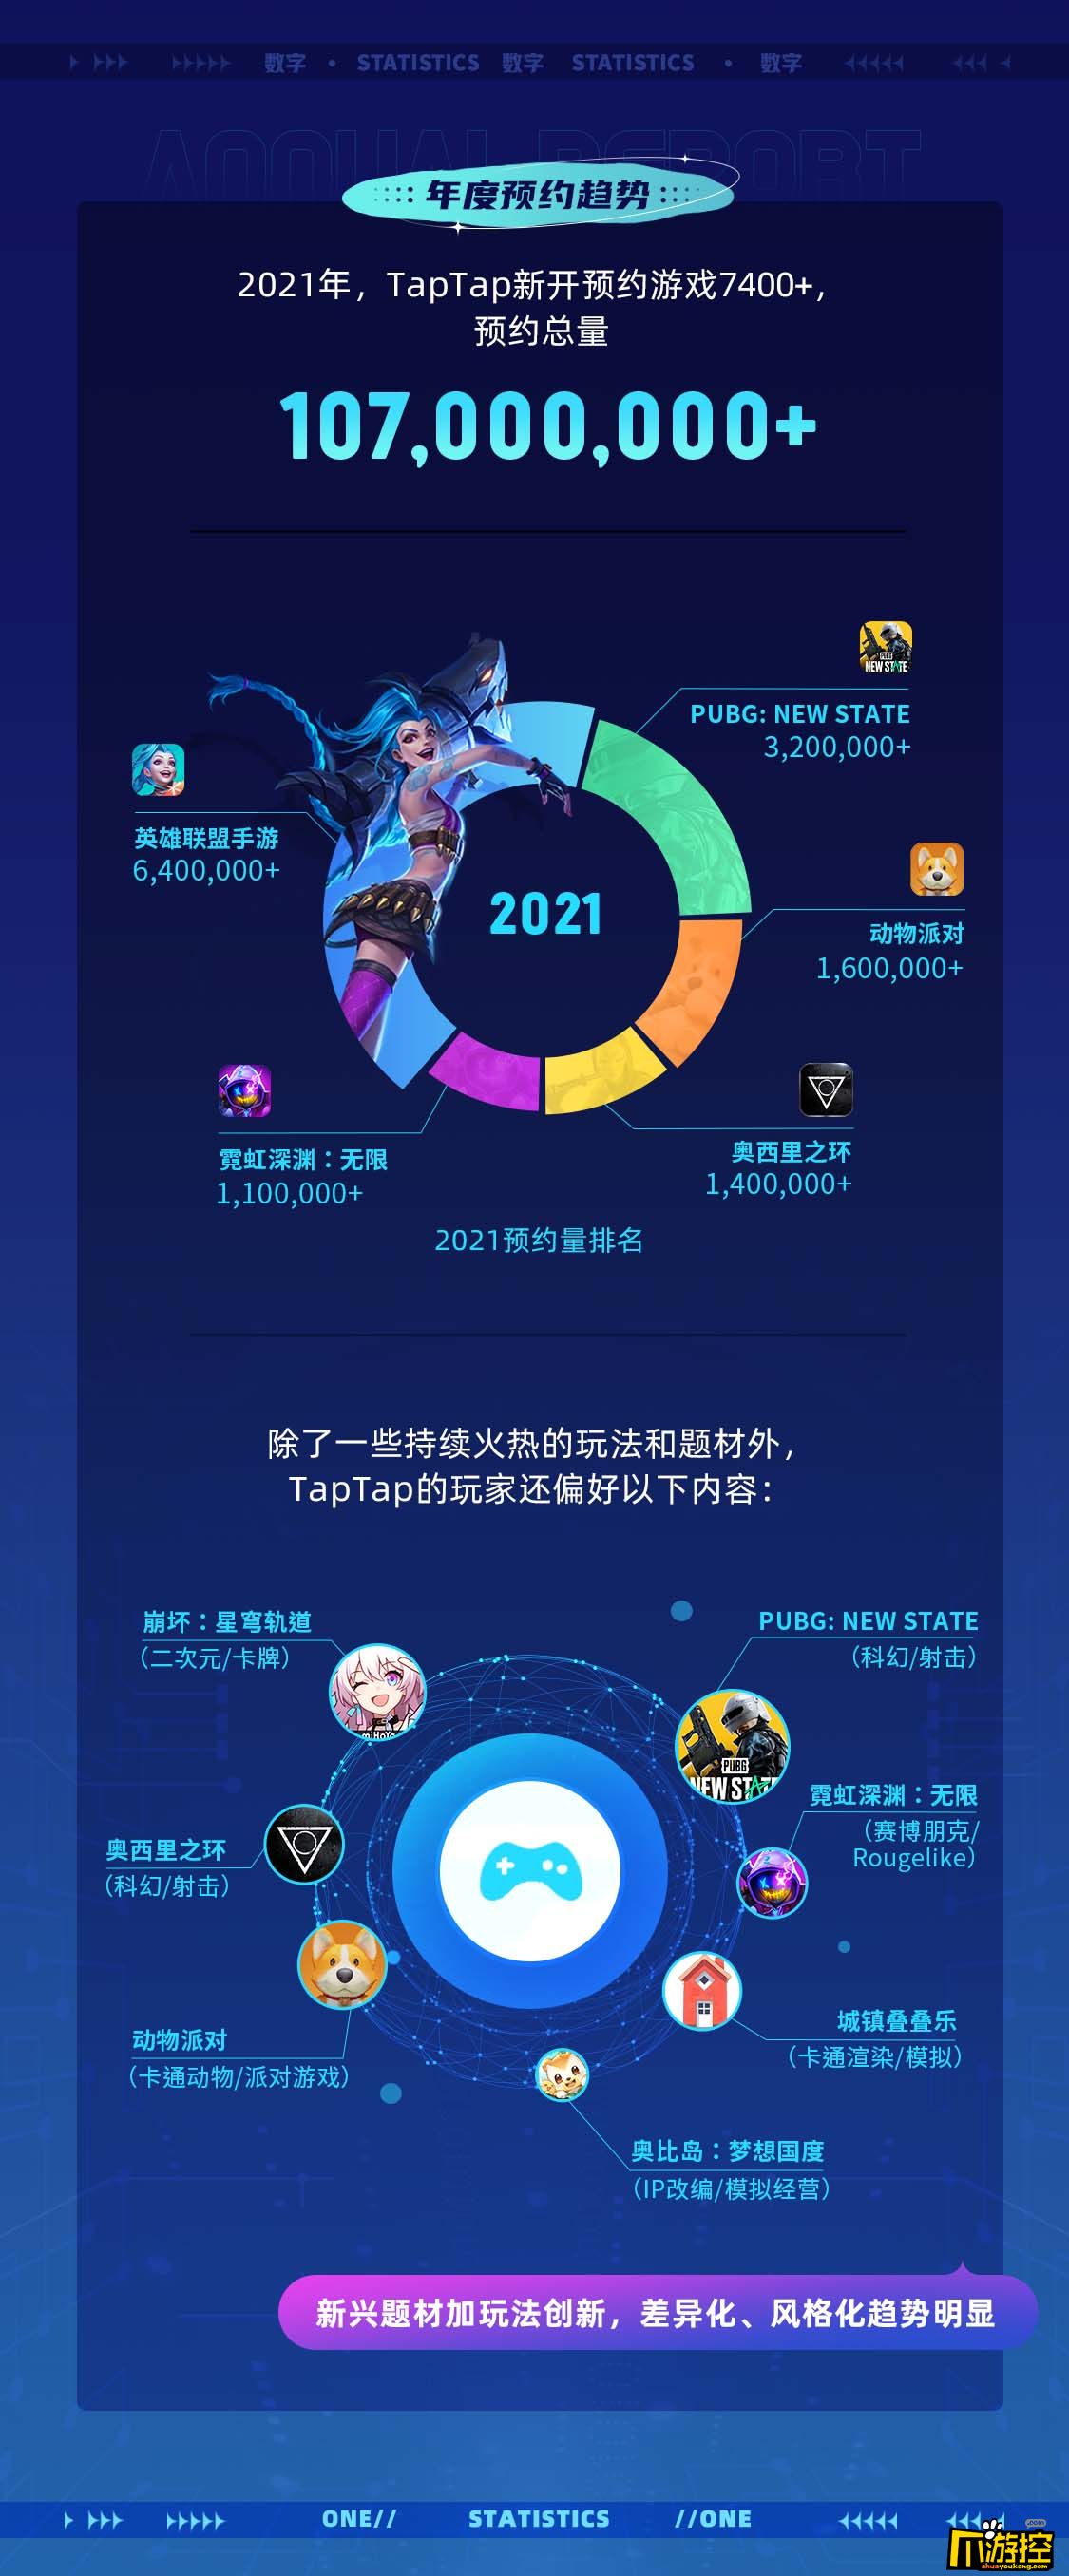 TapTap首次公布年度数据报告,2021年游戏分发超5亿次